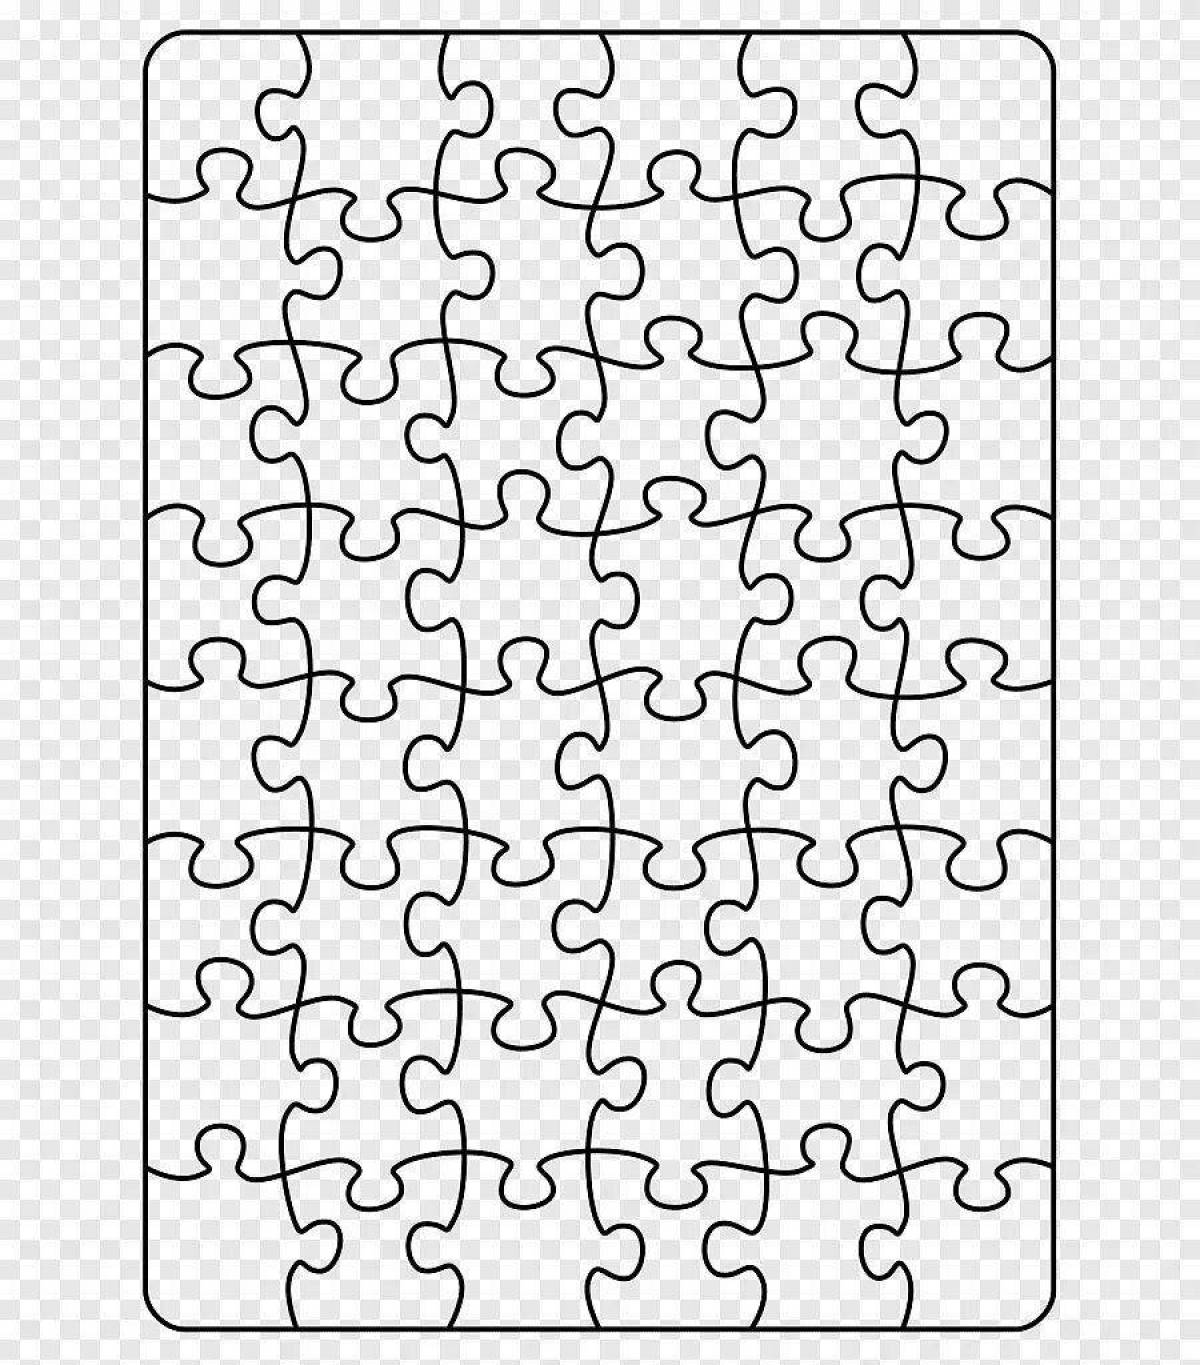 Jigsaw and cut #11